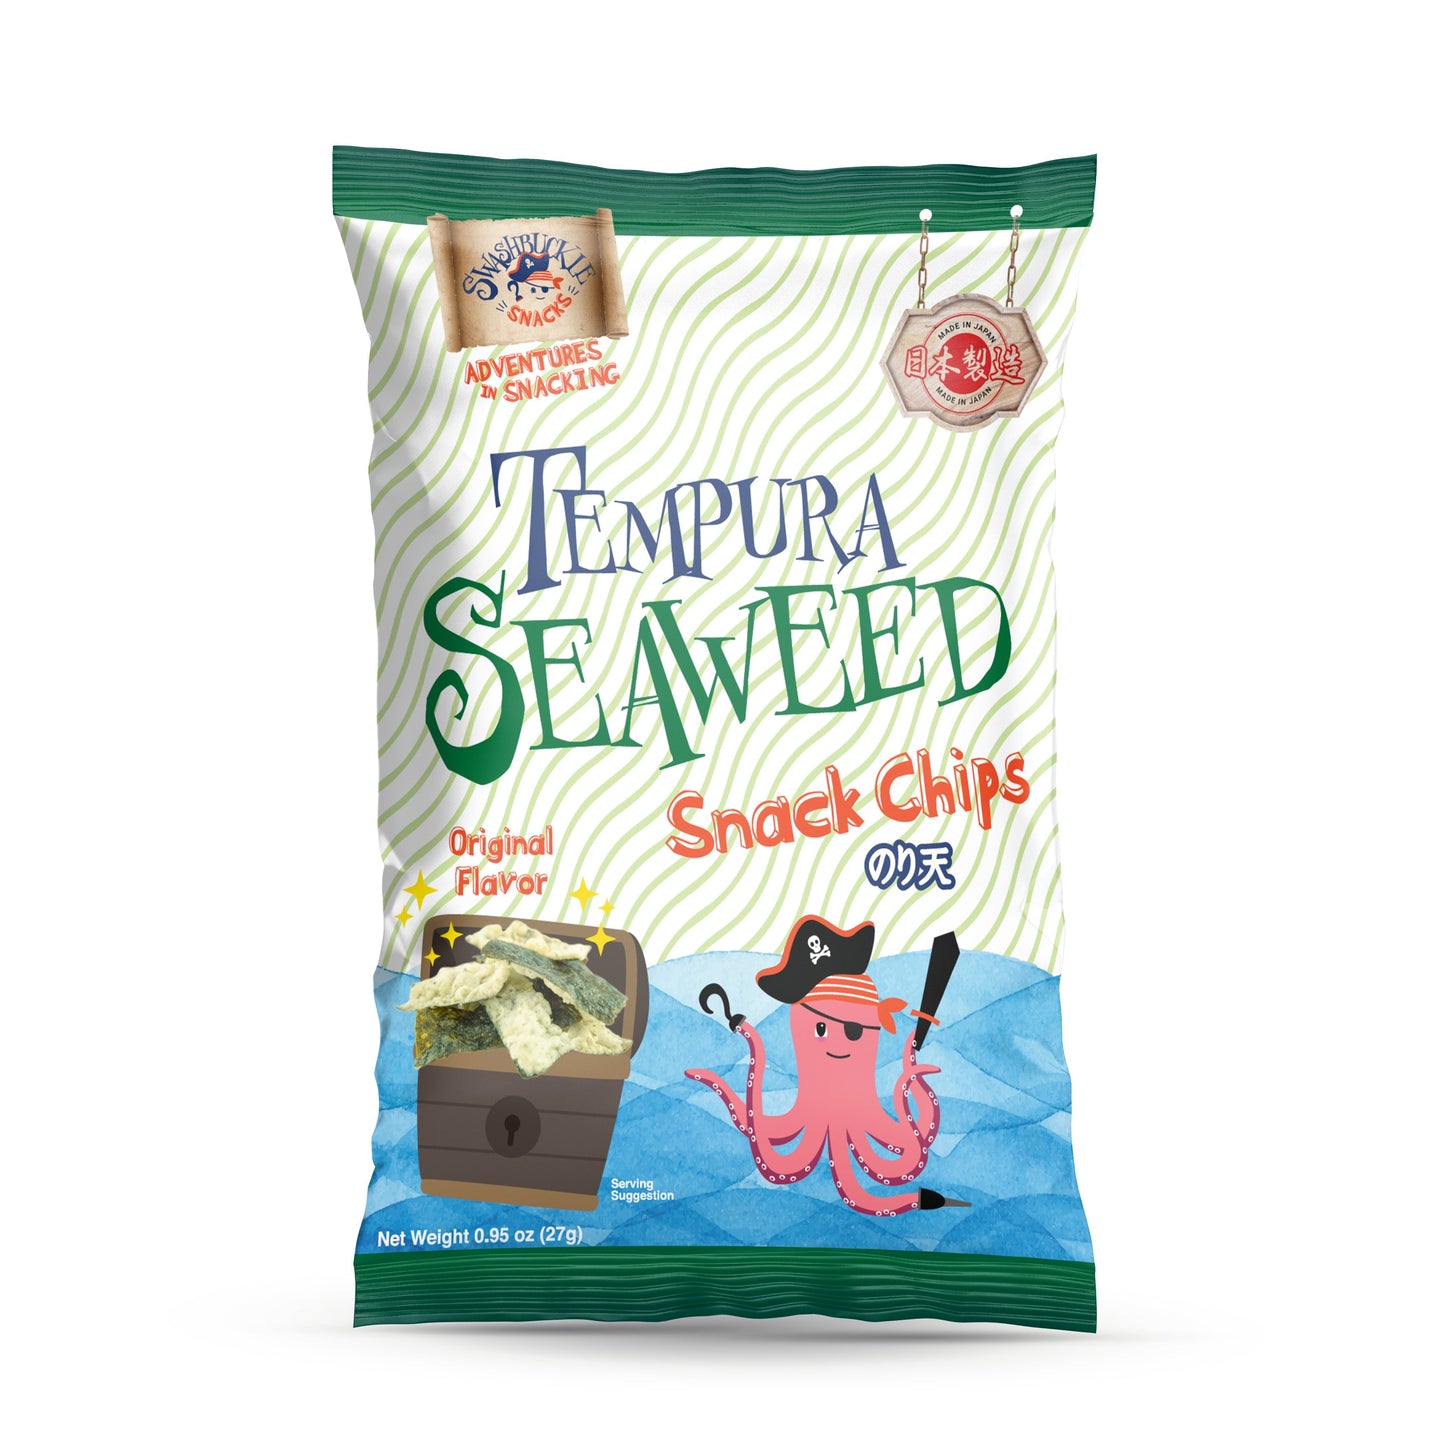 Crispy Tempura Seaweed Snack Chips Original Flavor